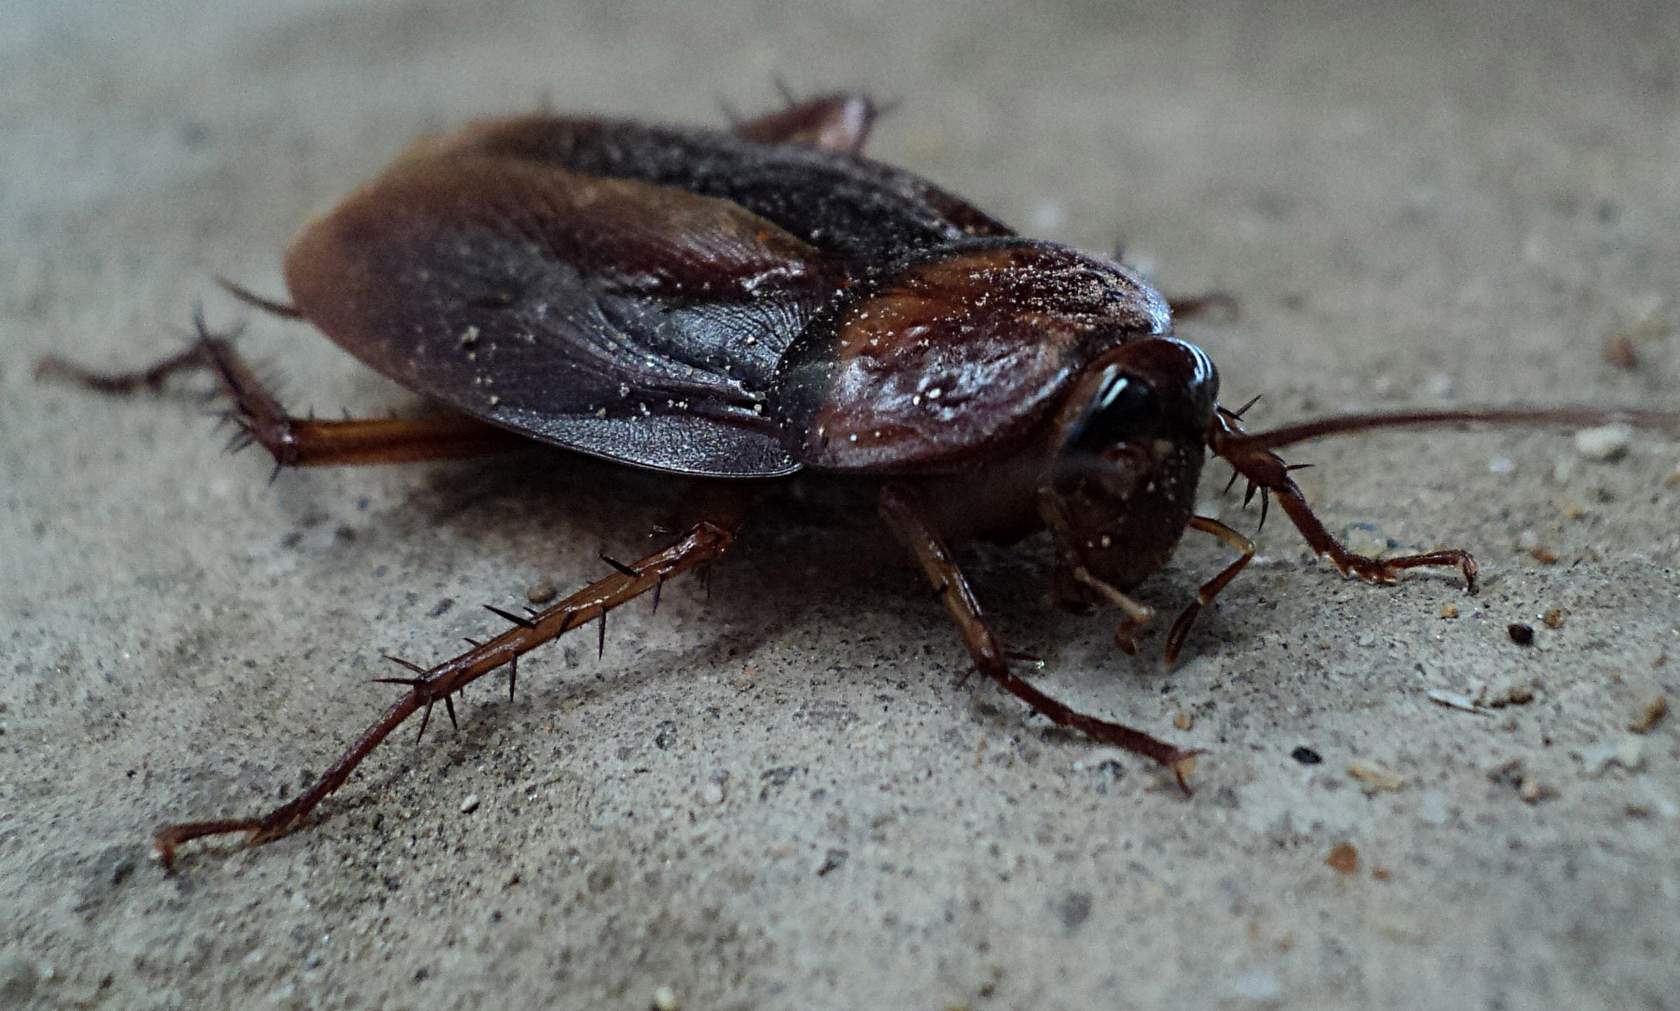 A cockroach on a concrete floor.